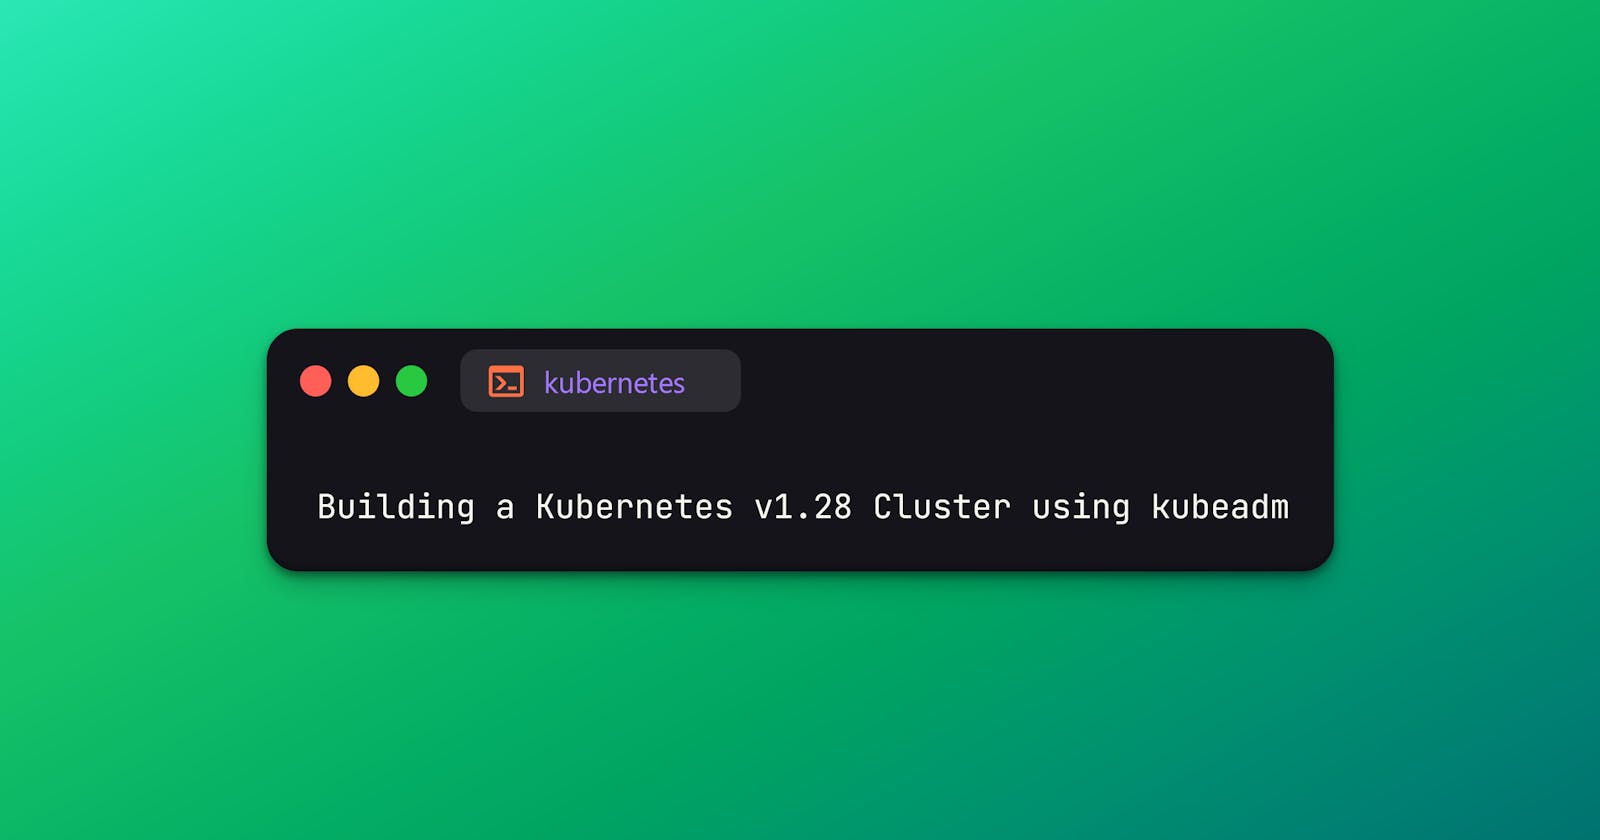 Building a Kubernetes v1.28 Cluster using kubeadm